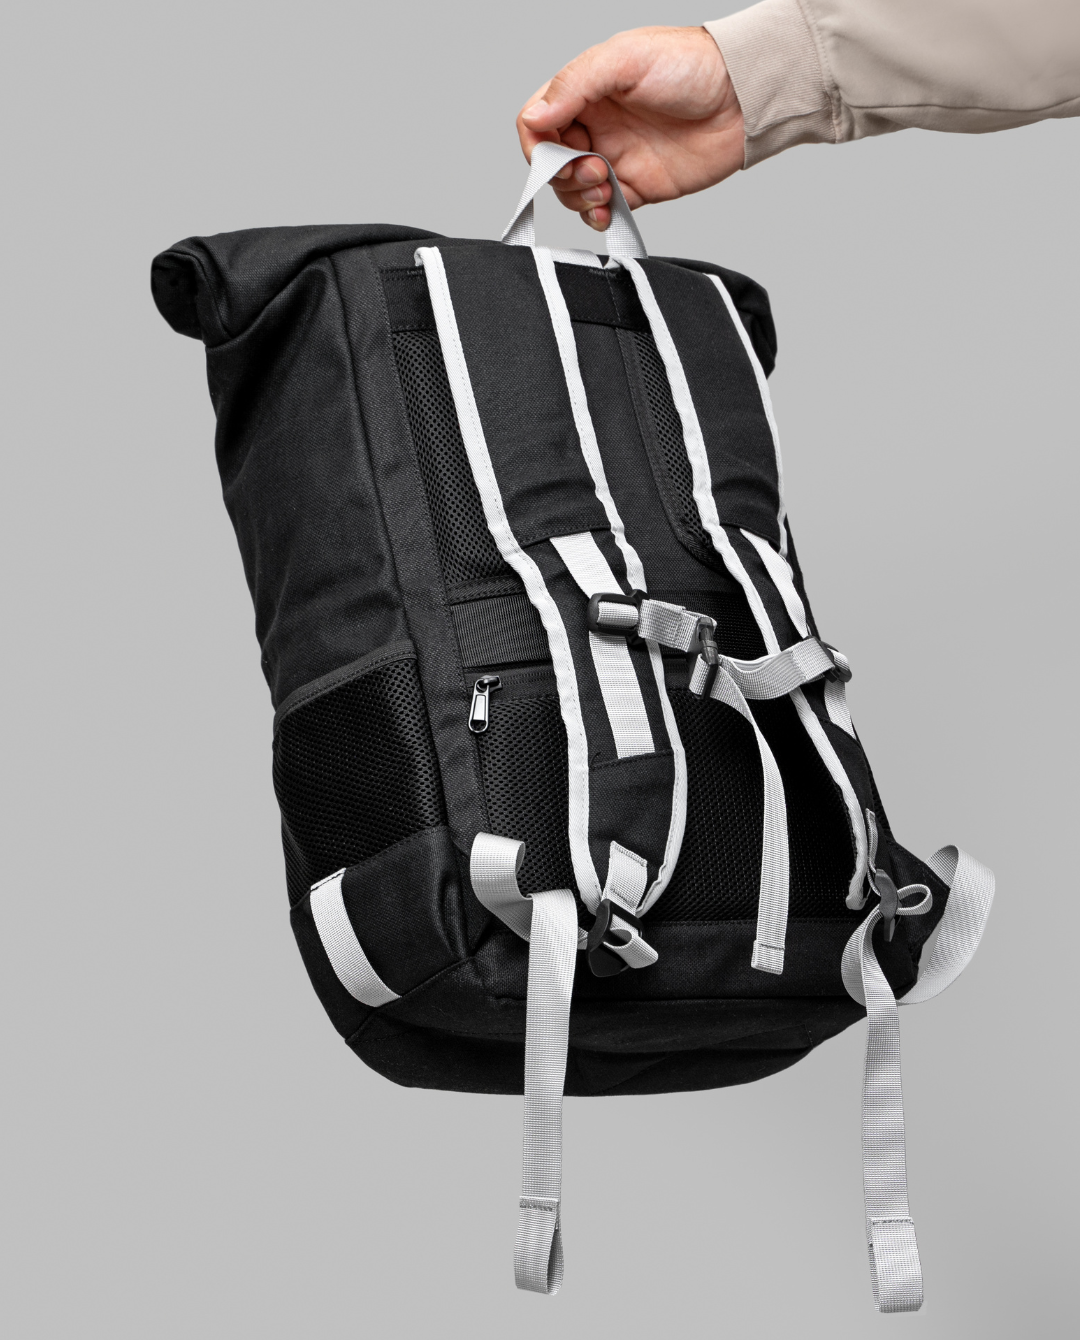 Polar Explorer Backpack [BLACK EDITION]